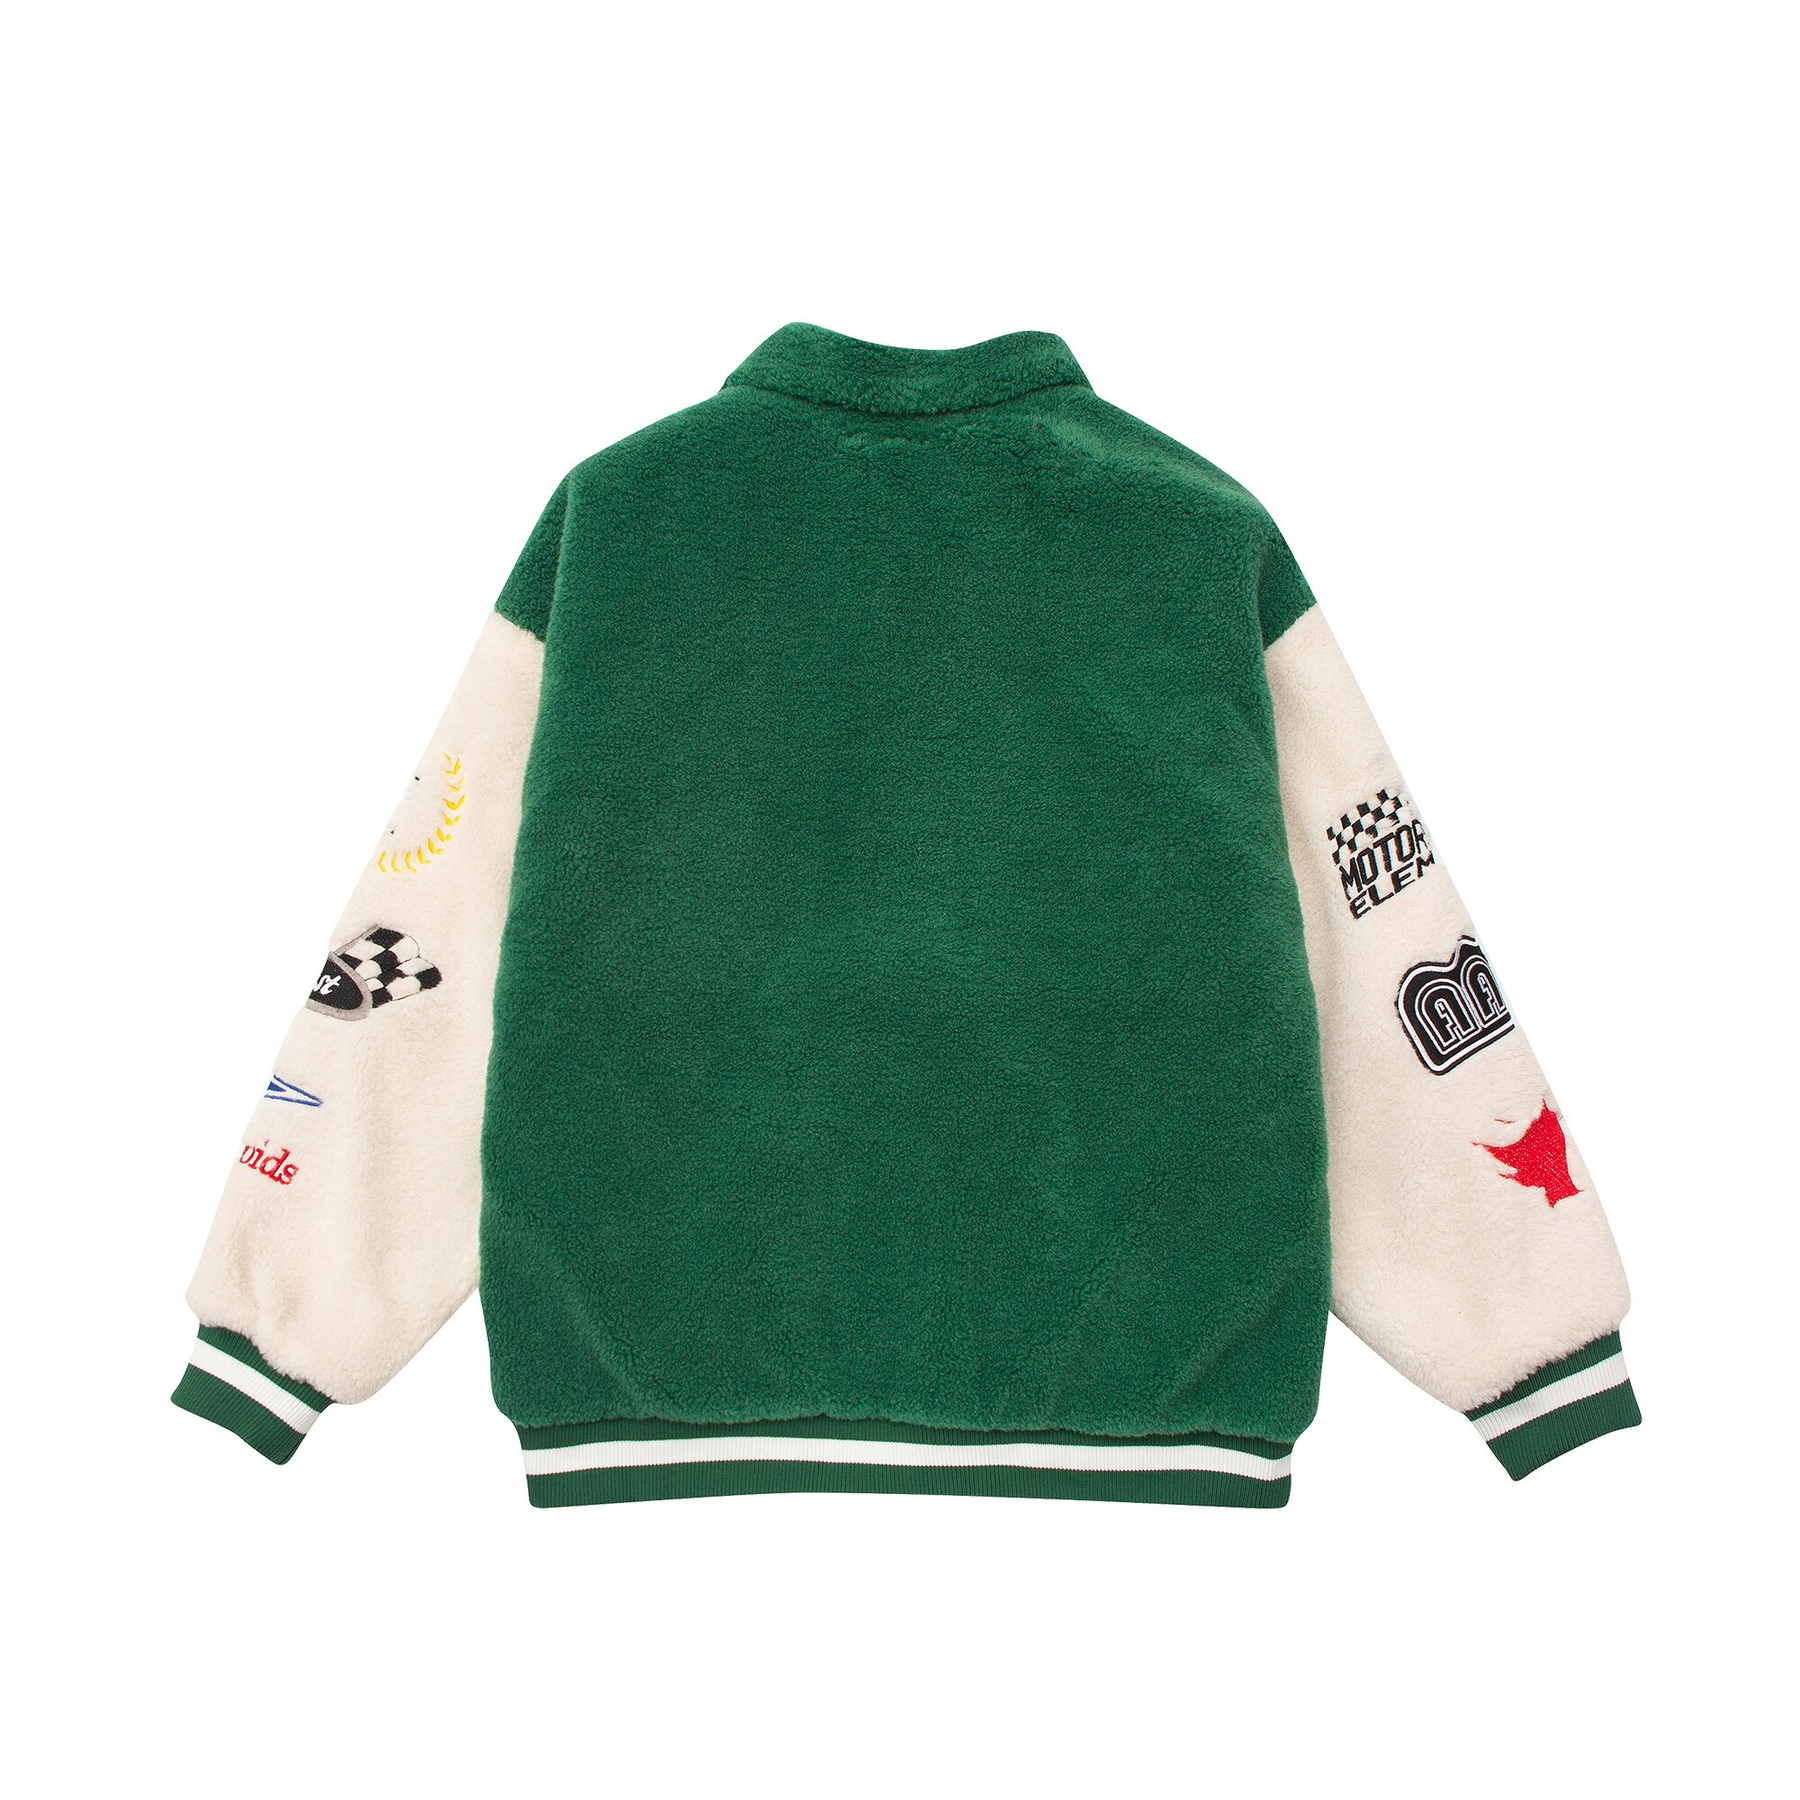 Eprezzy® - Green Asteroids Jacket Streetwear Fashion - eprezzy.com